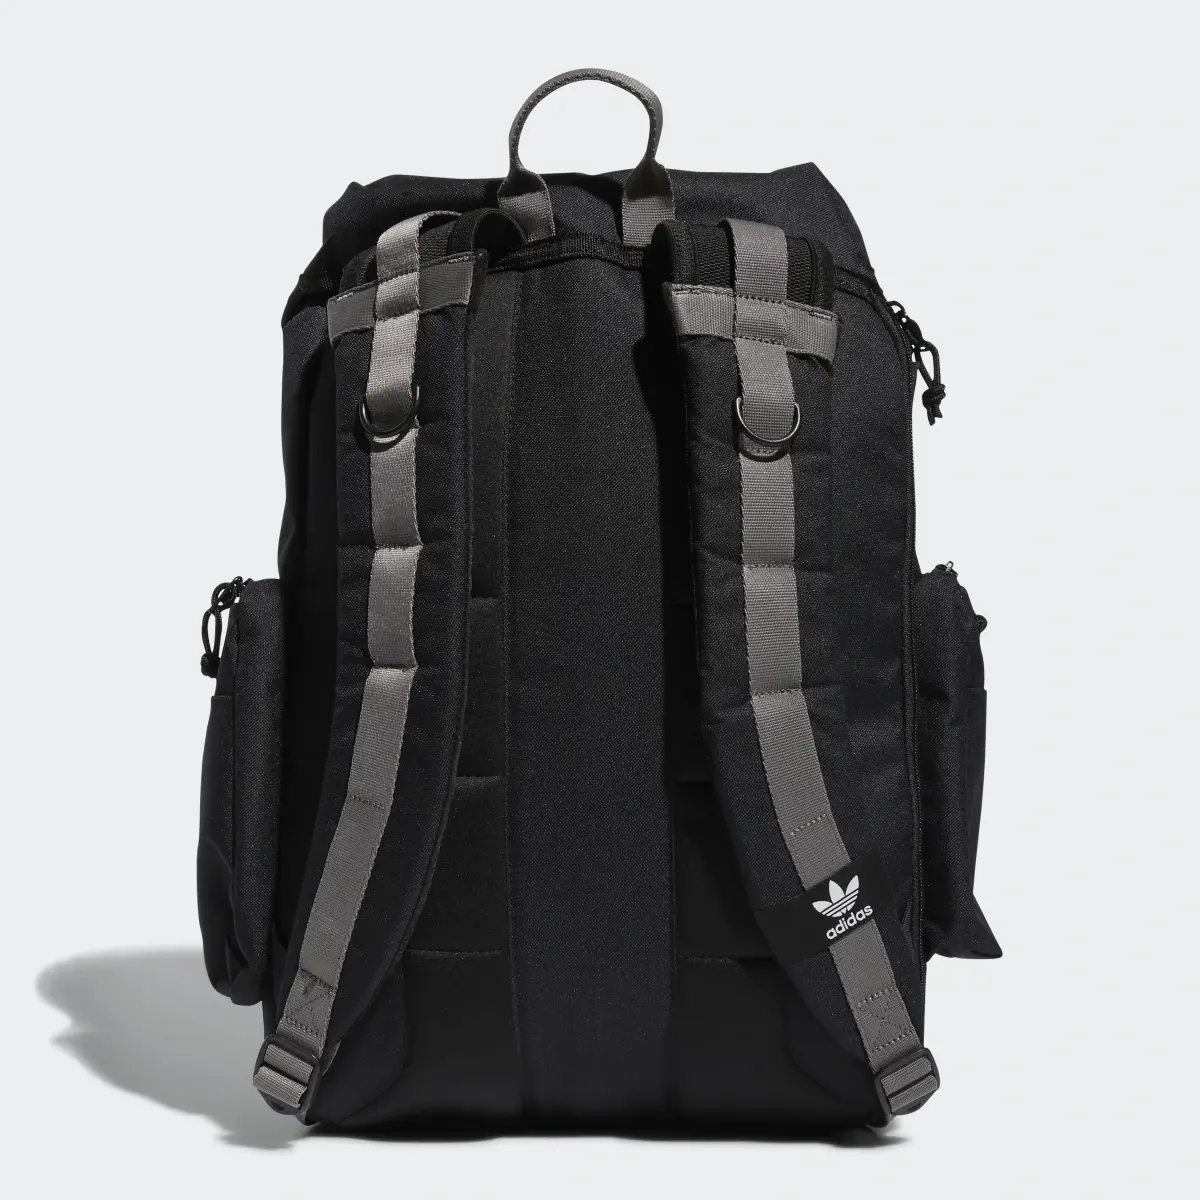 Adidas Utility Backpack 4.0. 3